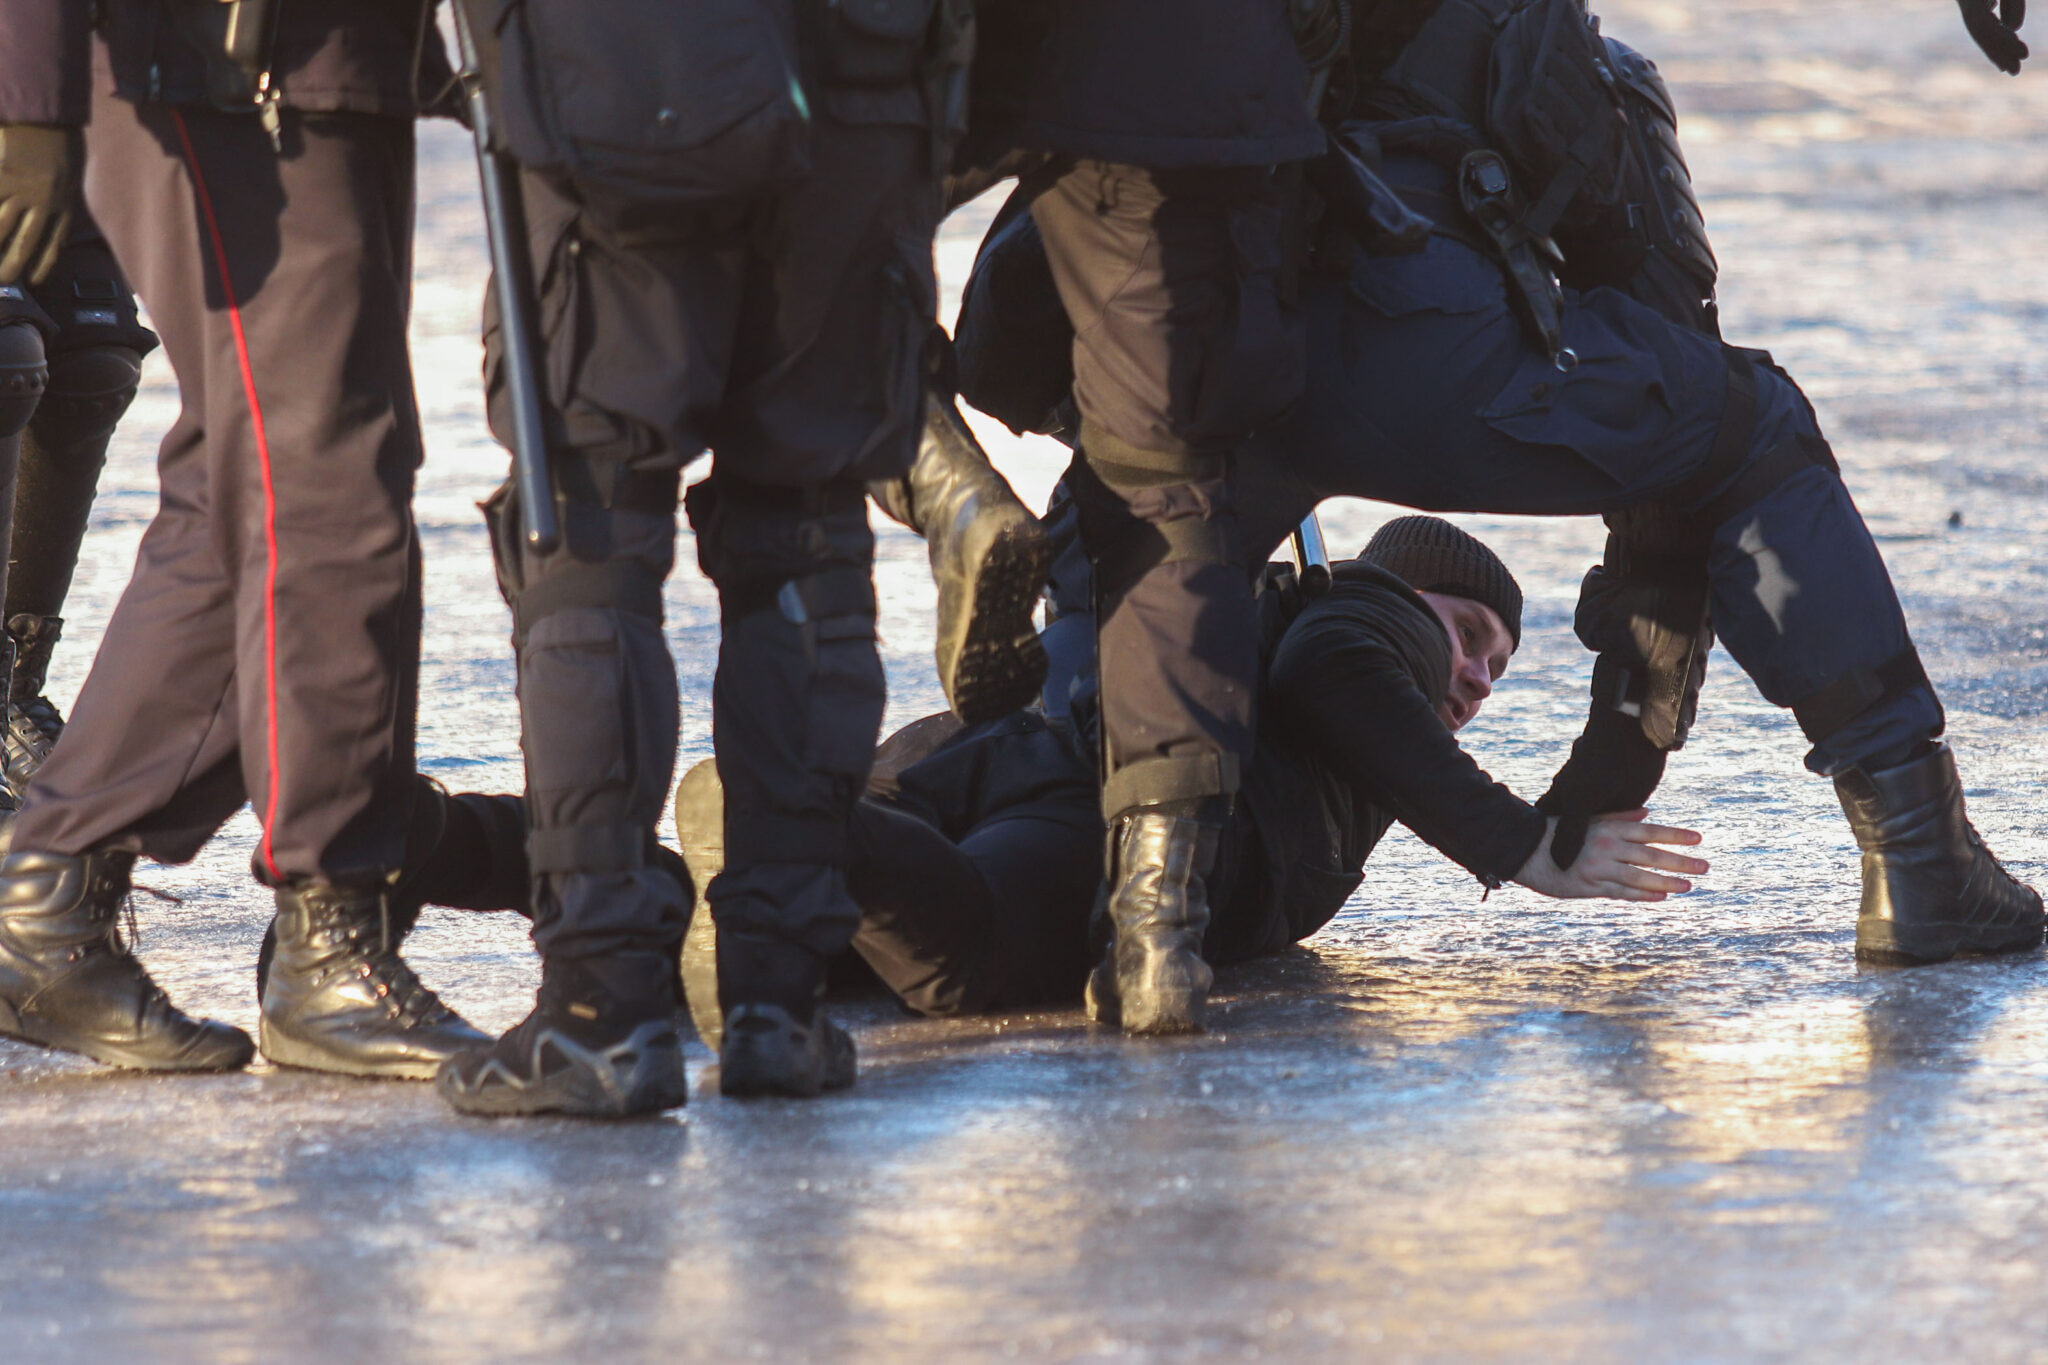 Арест на антивоенной манифестации в Санкт-Петербурге. 6 марта 2022 года. Фото SOPA Images via ZUMA Press Wire/Scanpix/Leta

